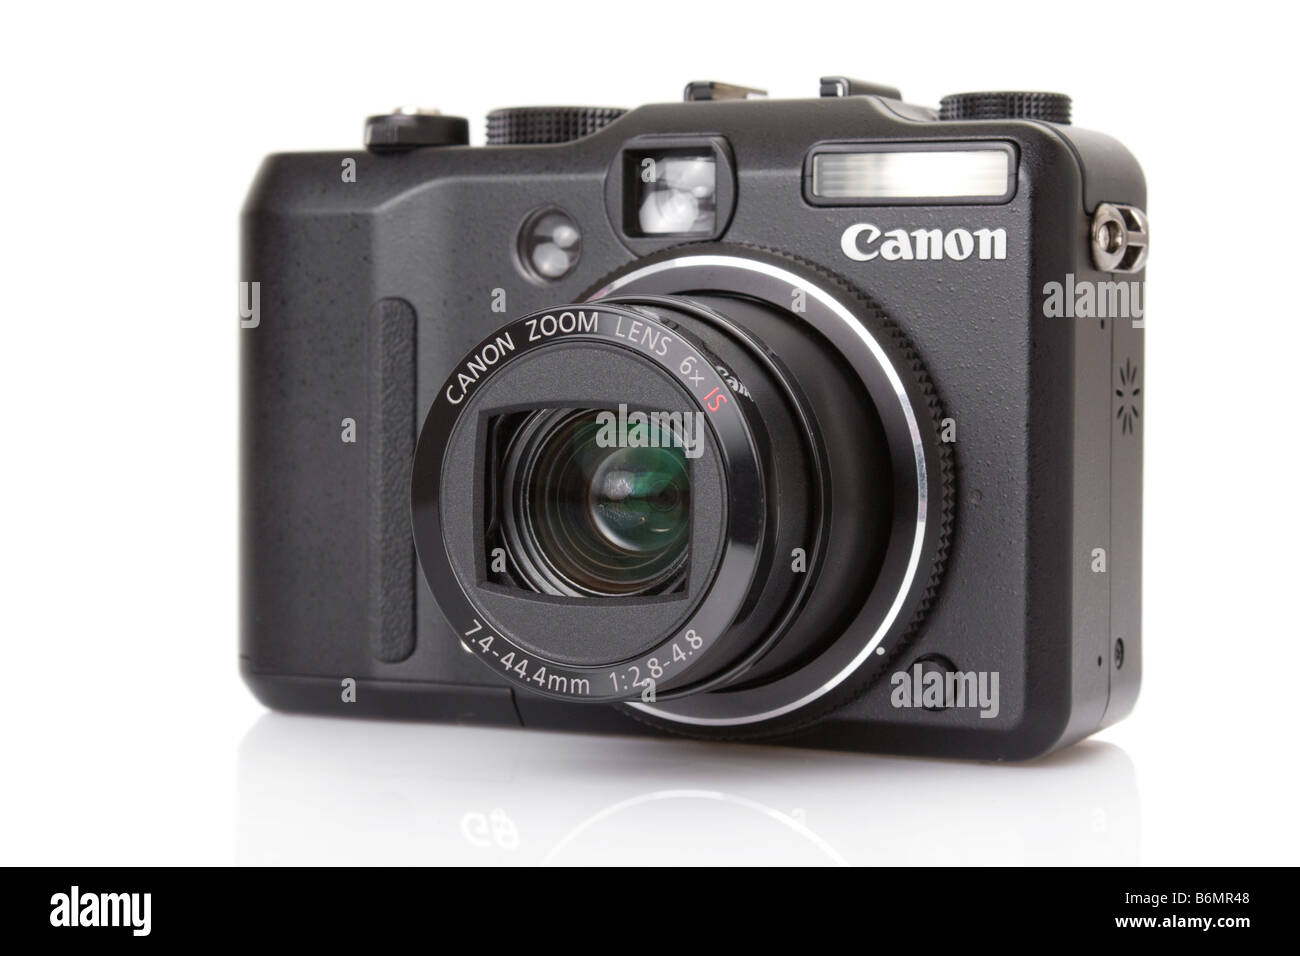 Canon Powershot G9 digital compact camera Stock Photo